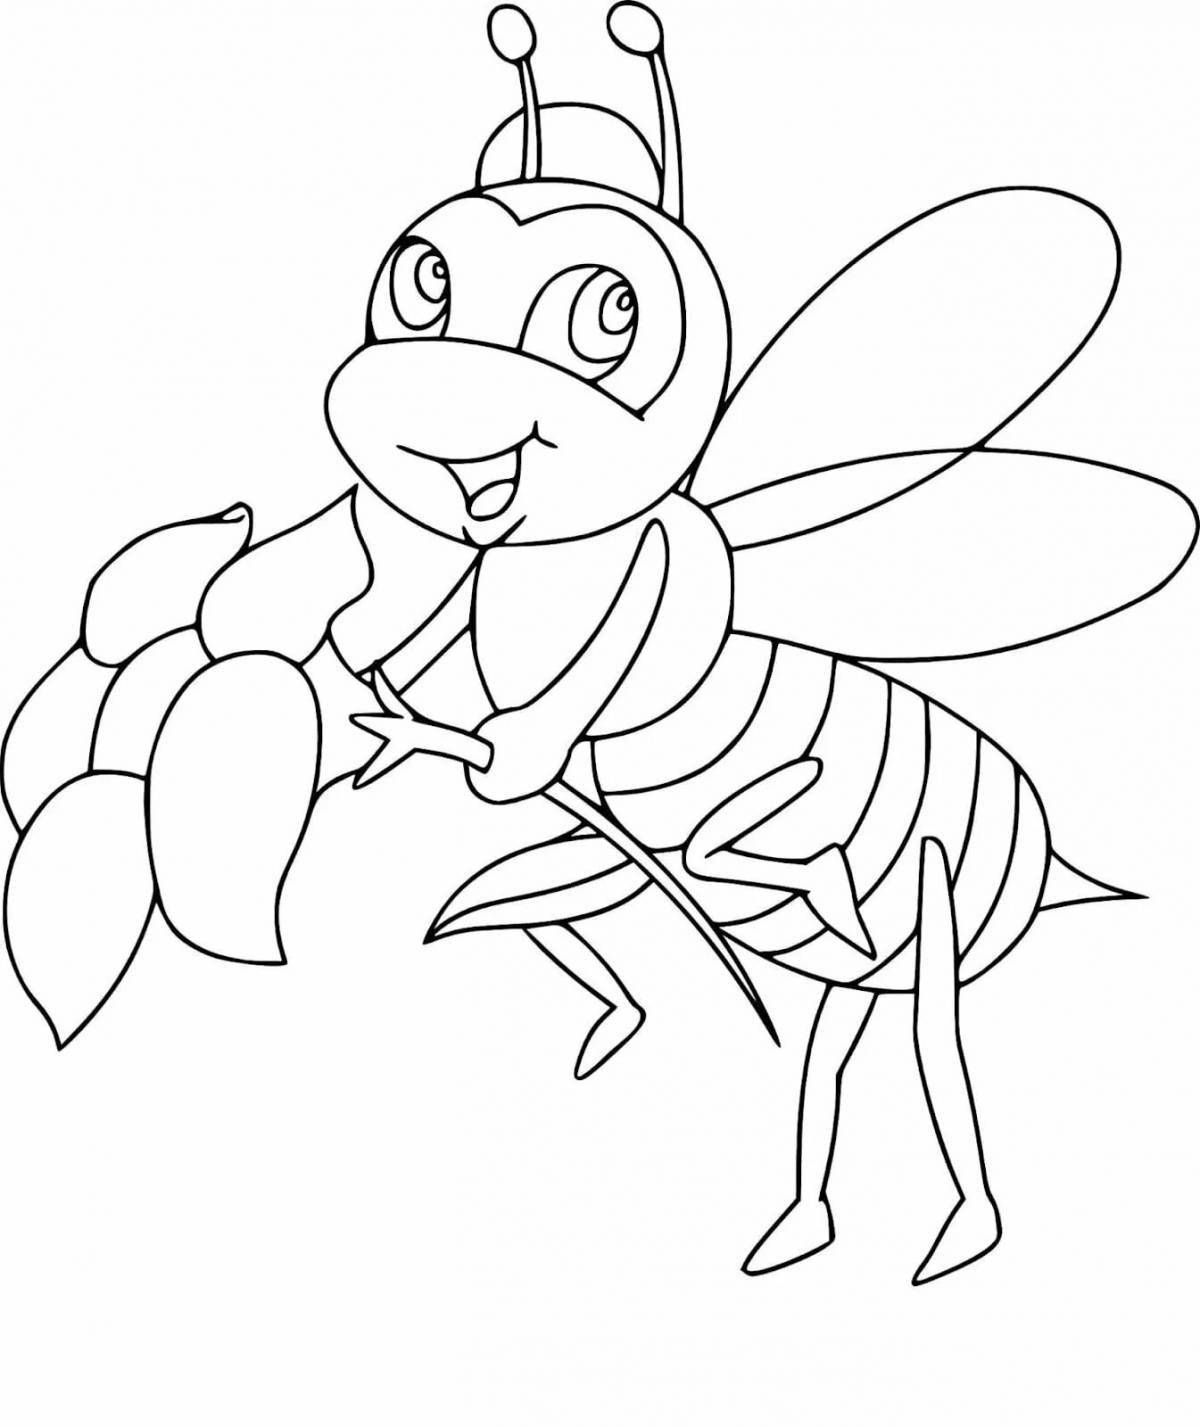 Раскраски пчелы - для печати